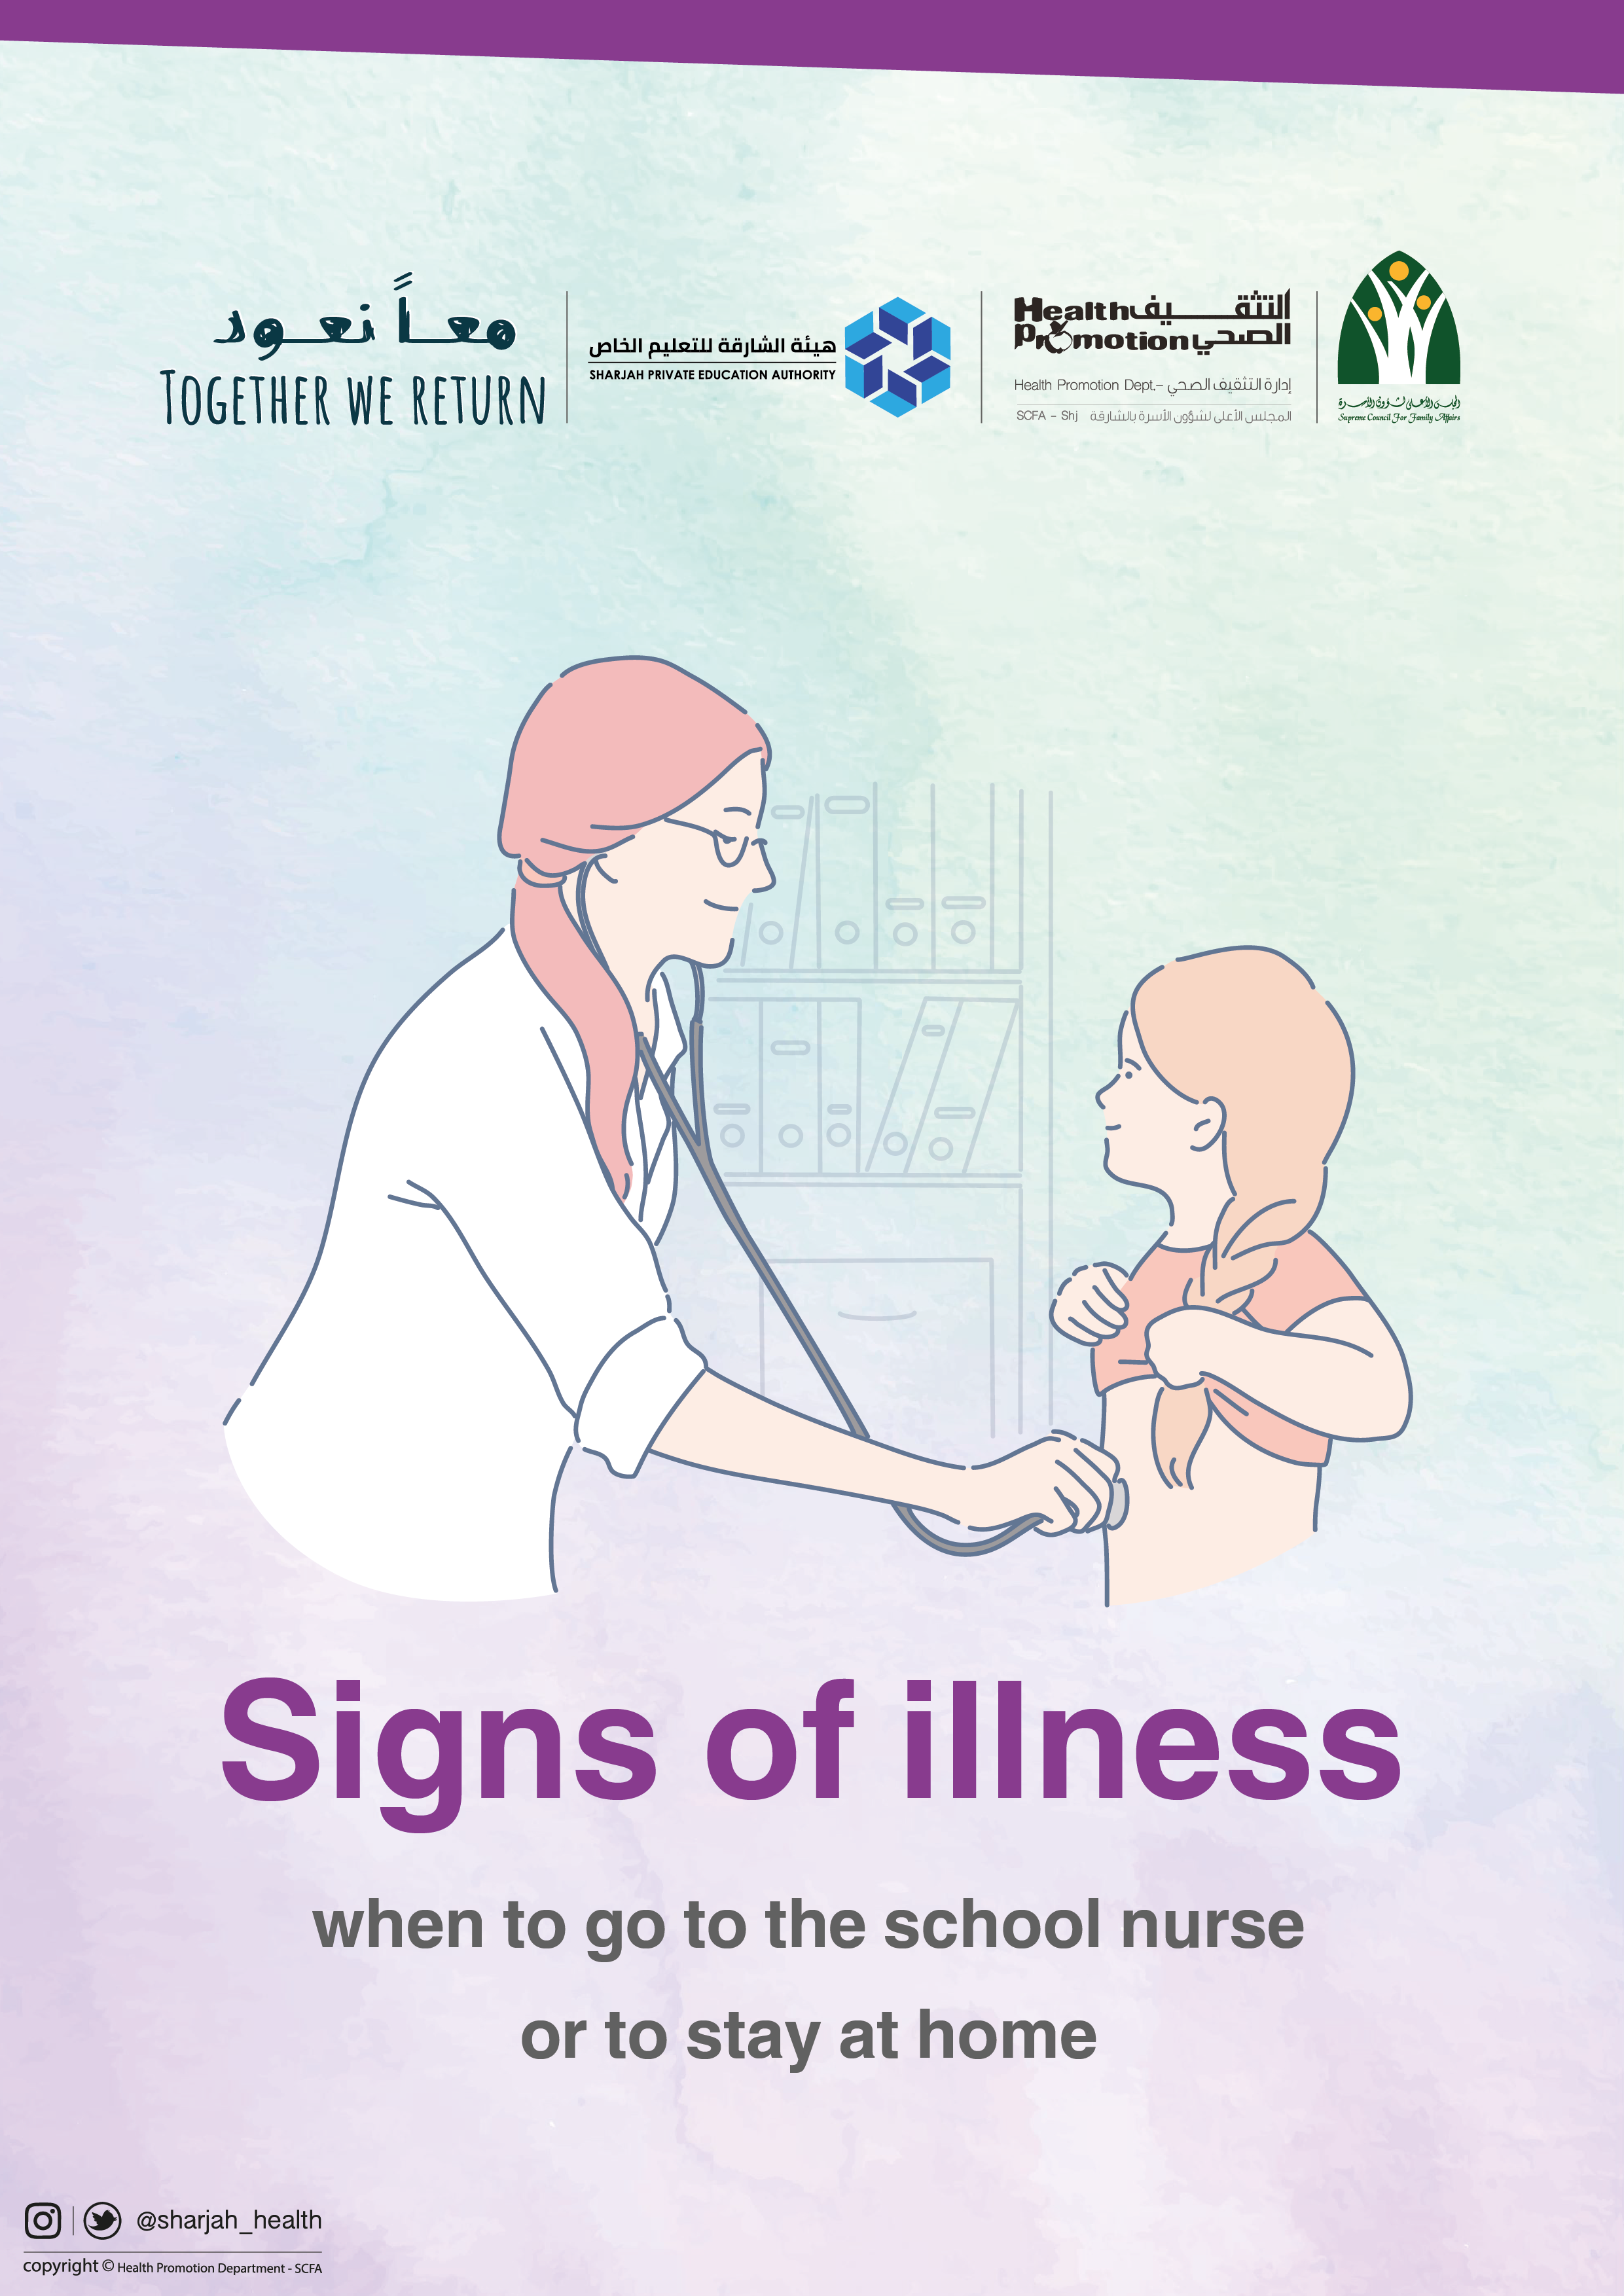 Signs of illness